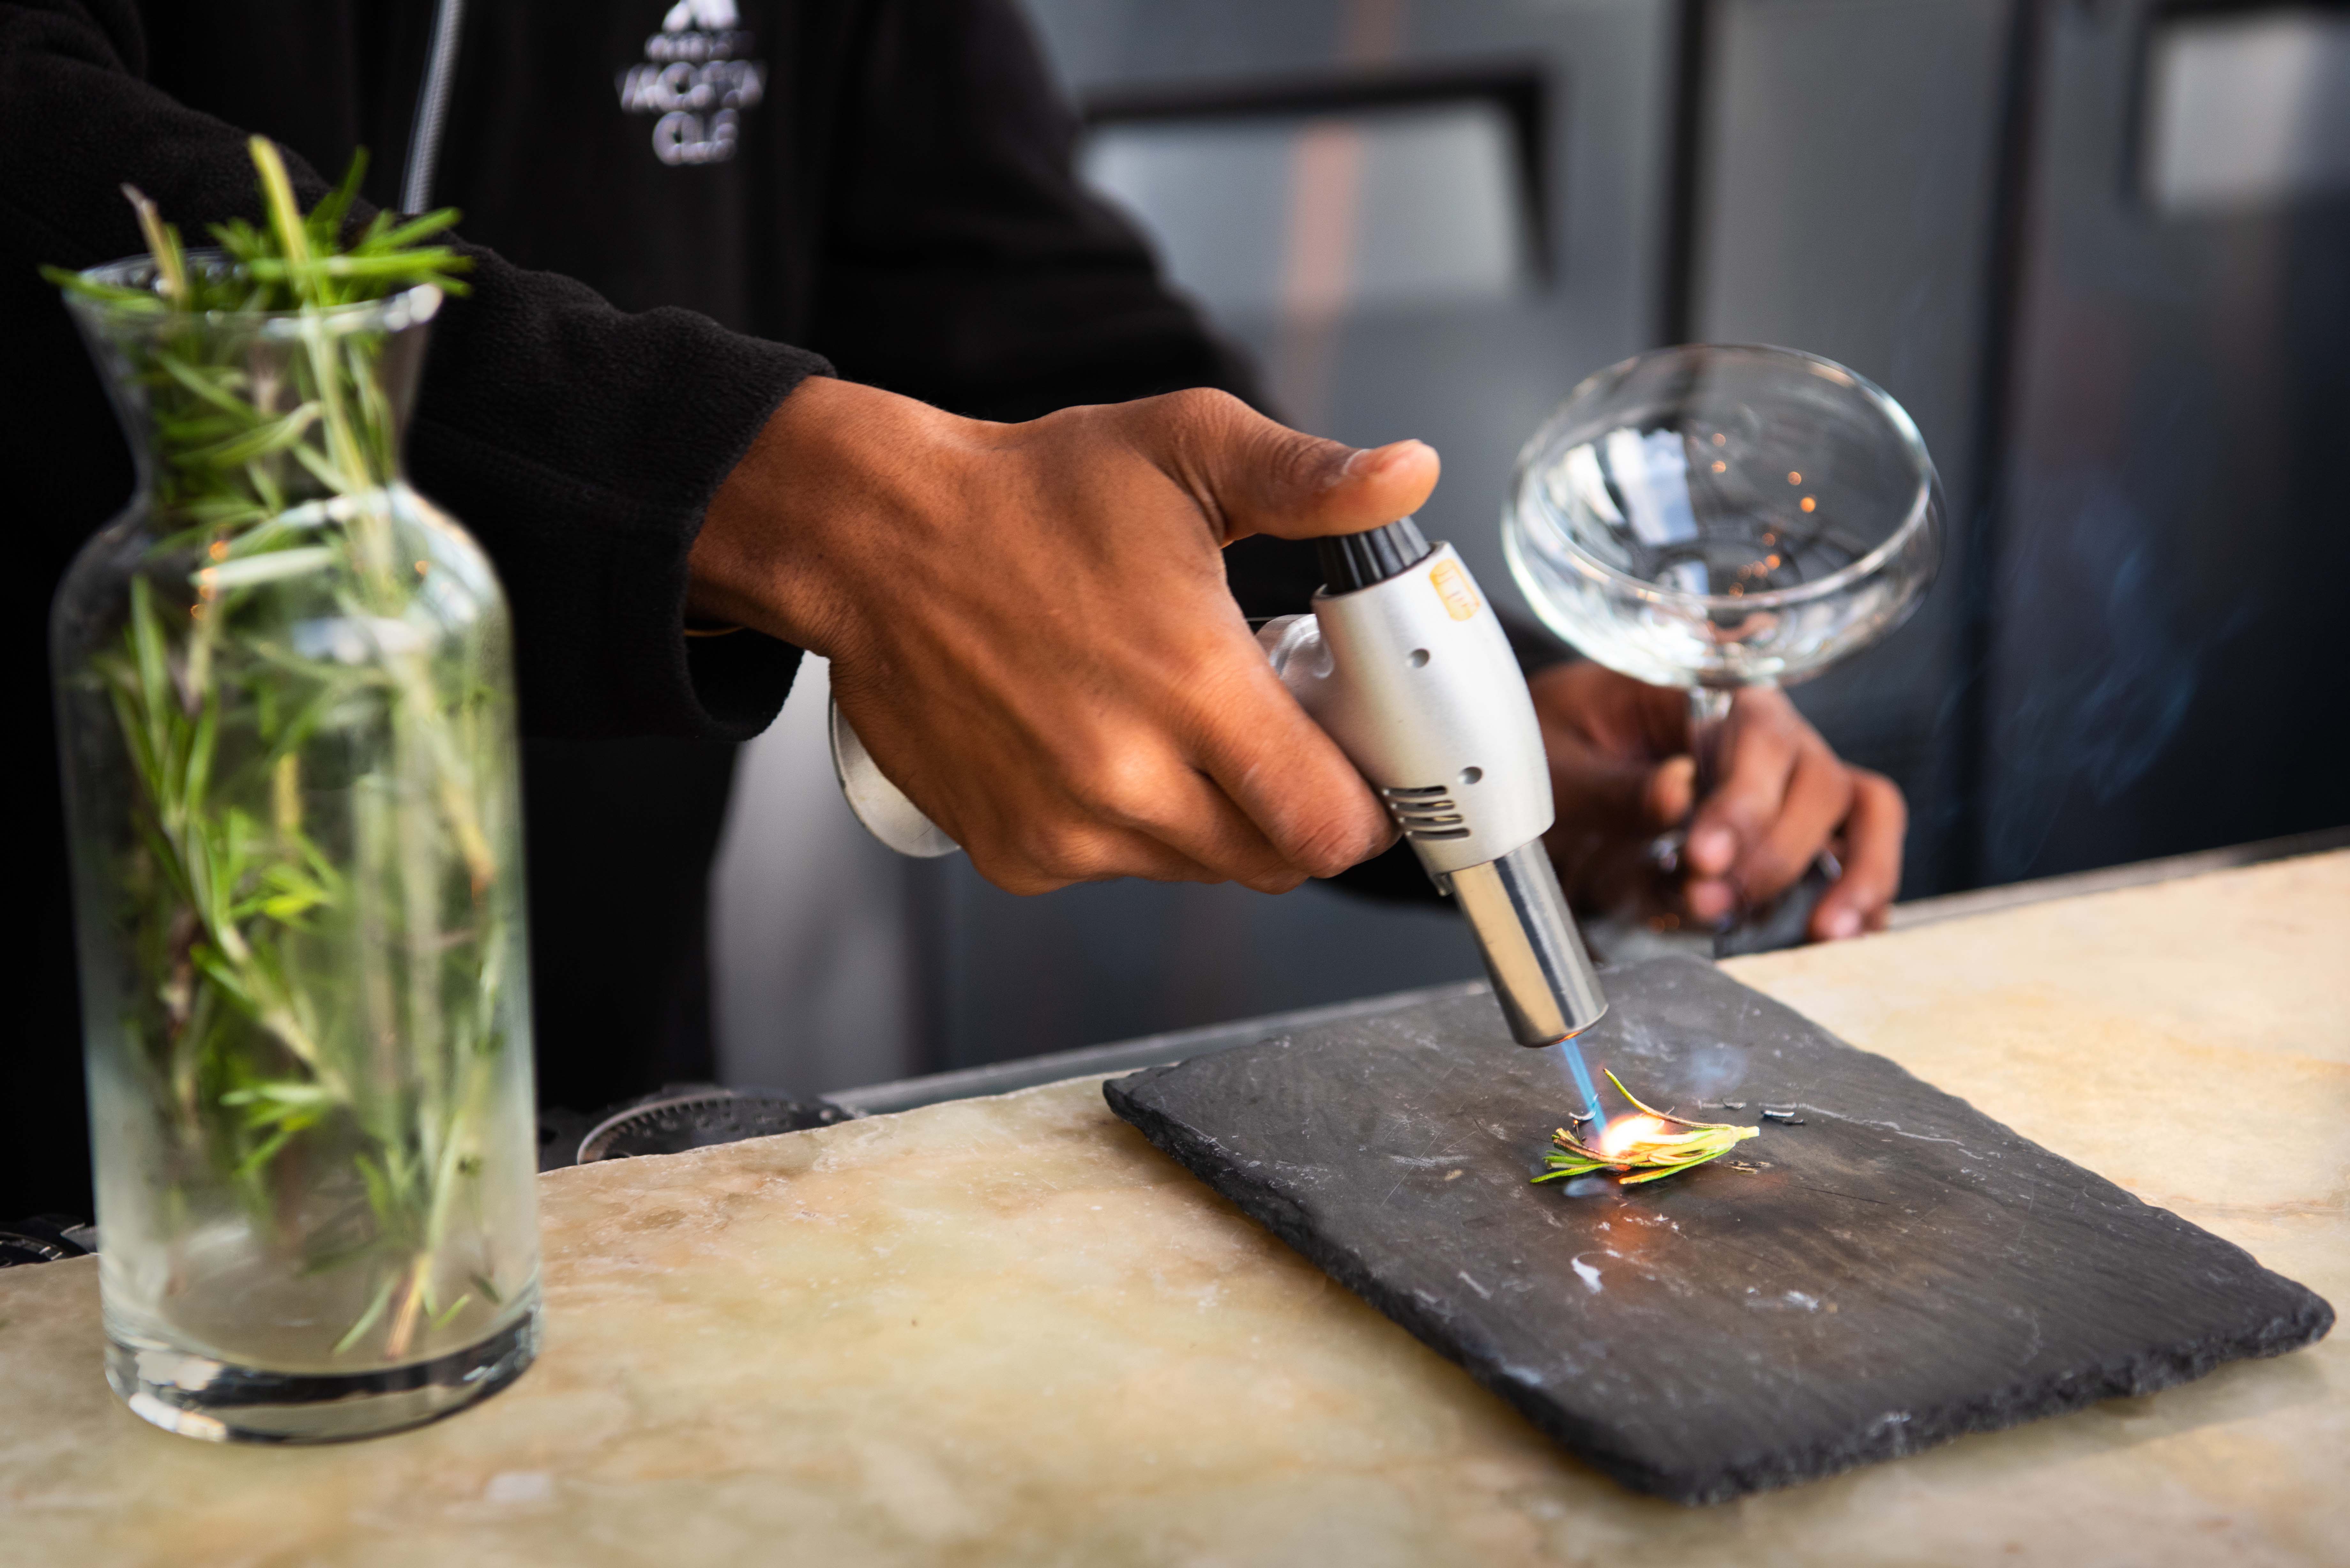 Man making cocktail garnish using a hand torch on green herbs